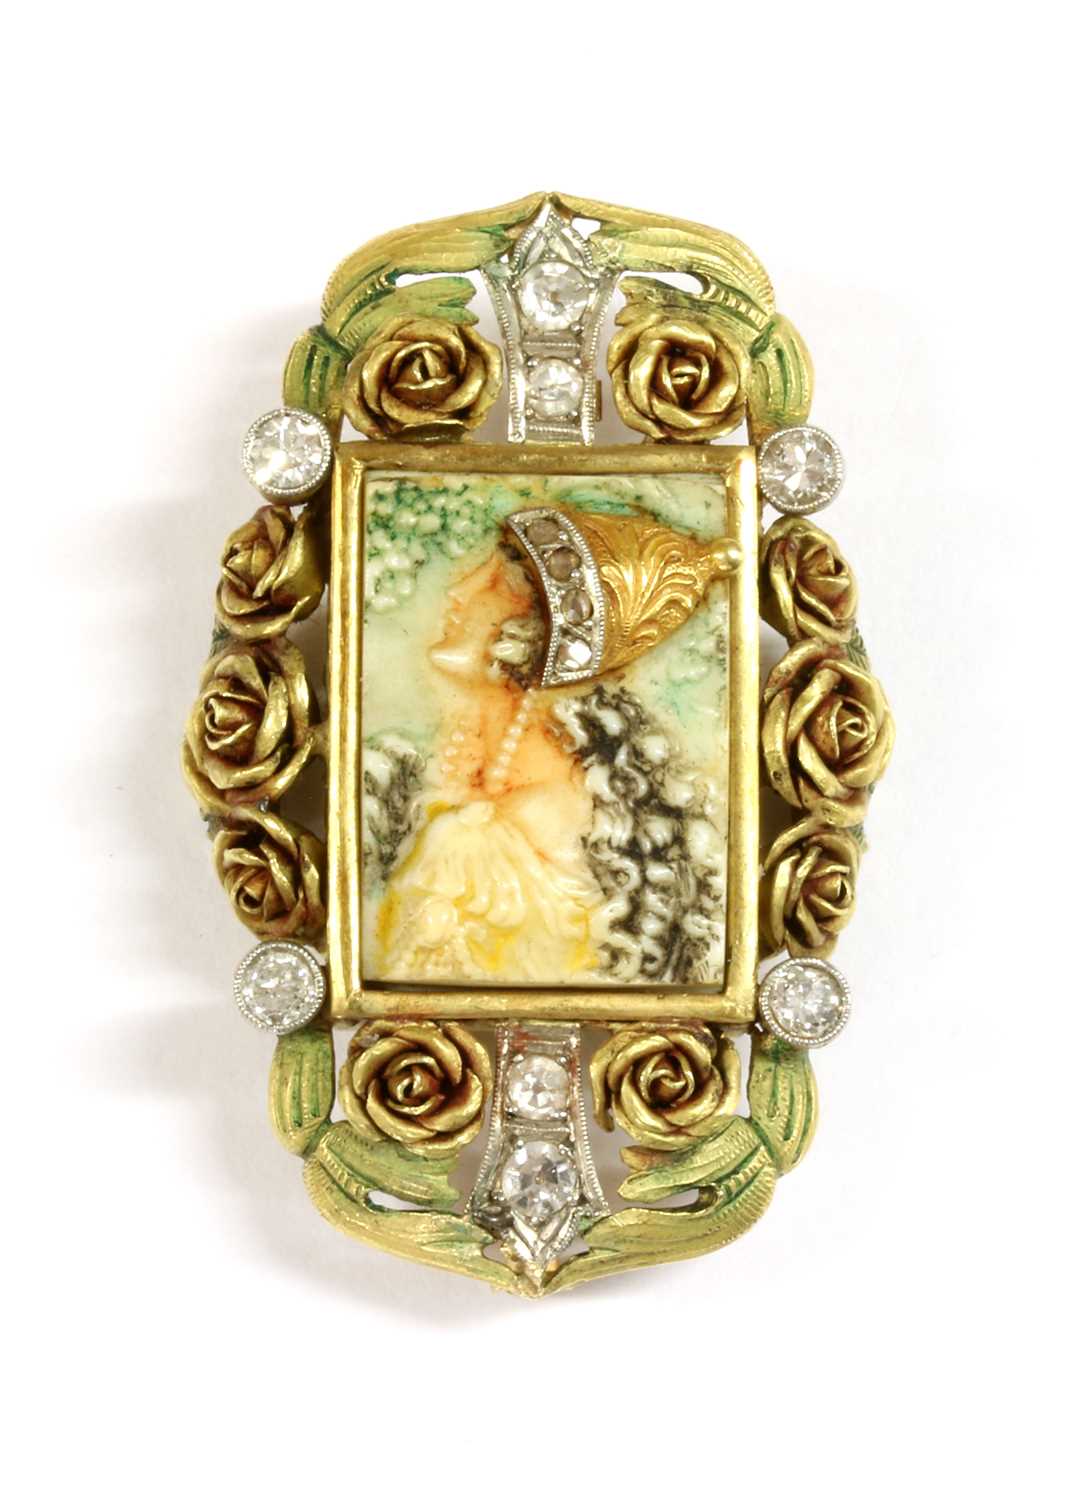 Lot 79 - An Art Nouveau diamond, ivory and enamel brooch/pendant